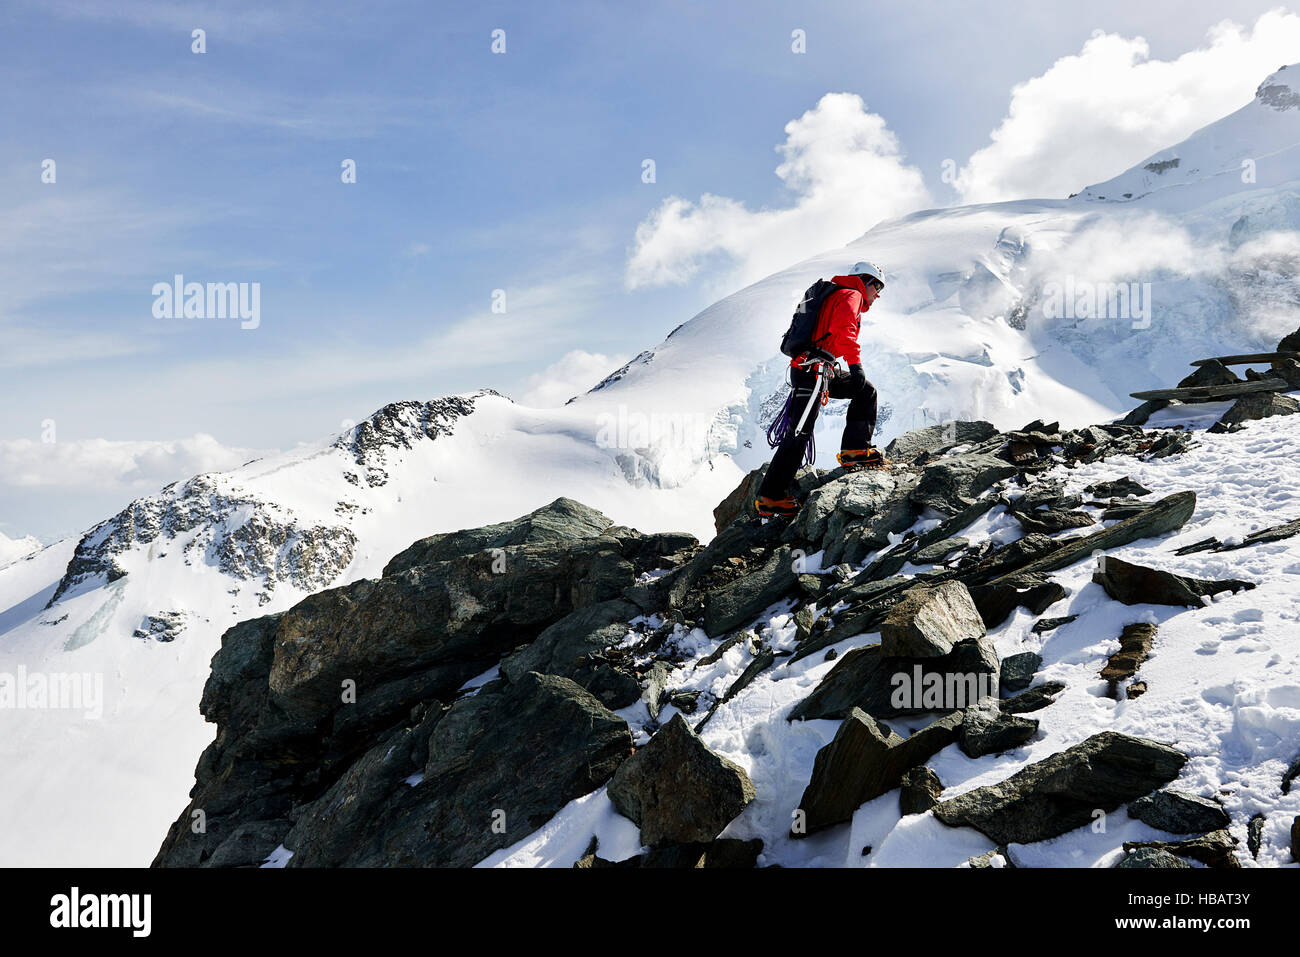 Man climbing up snow covered mountain, Saas Fee, Switzerland Stock Photo